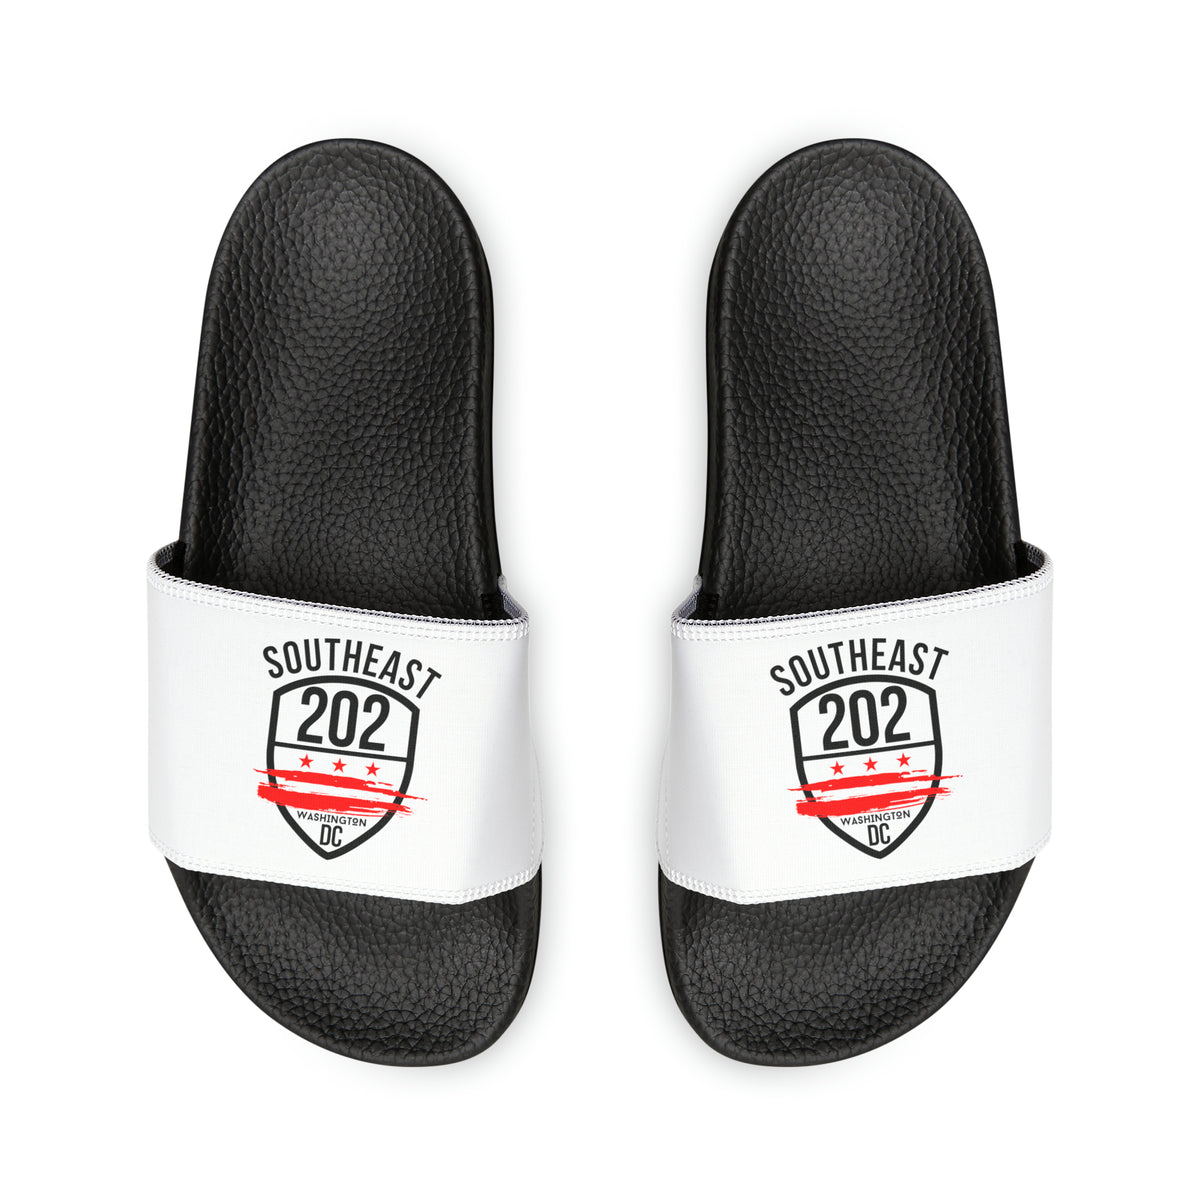 SOUTHEAST/202-CLASSIC LOGO  Men's Slide Sandals